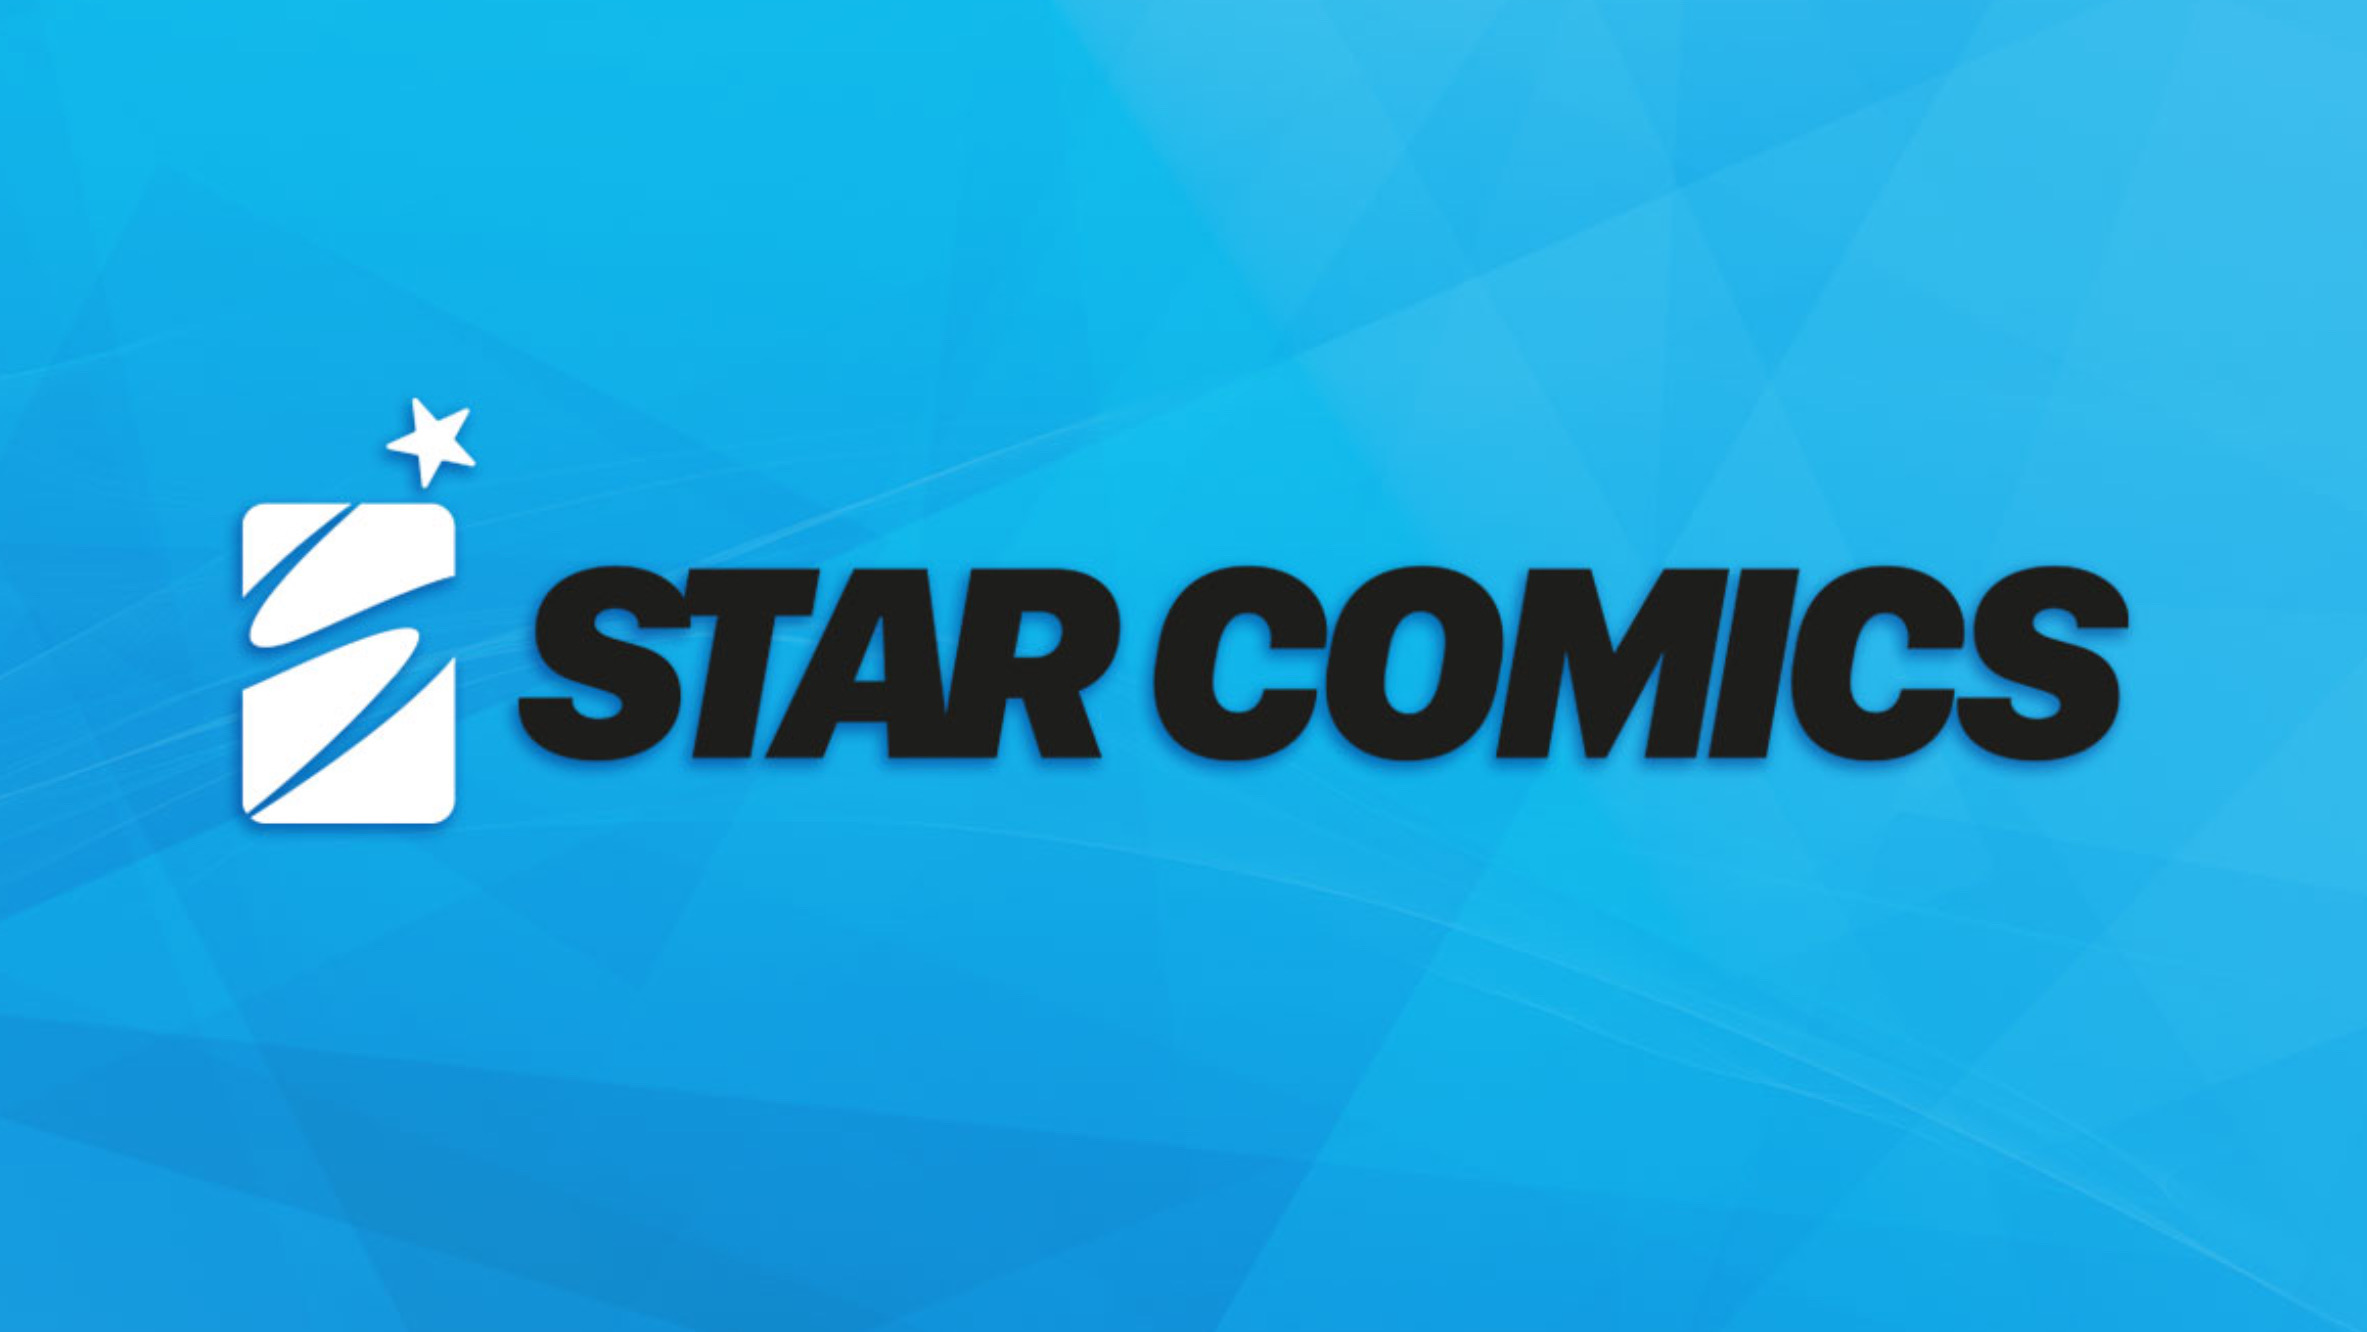 Star Comics logo